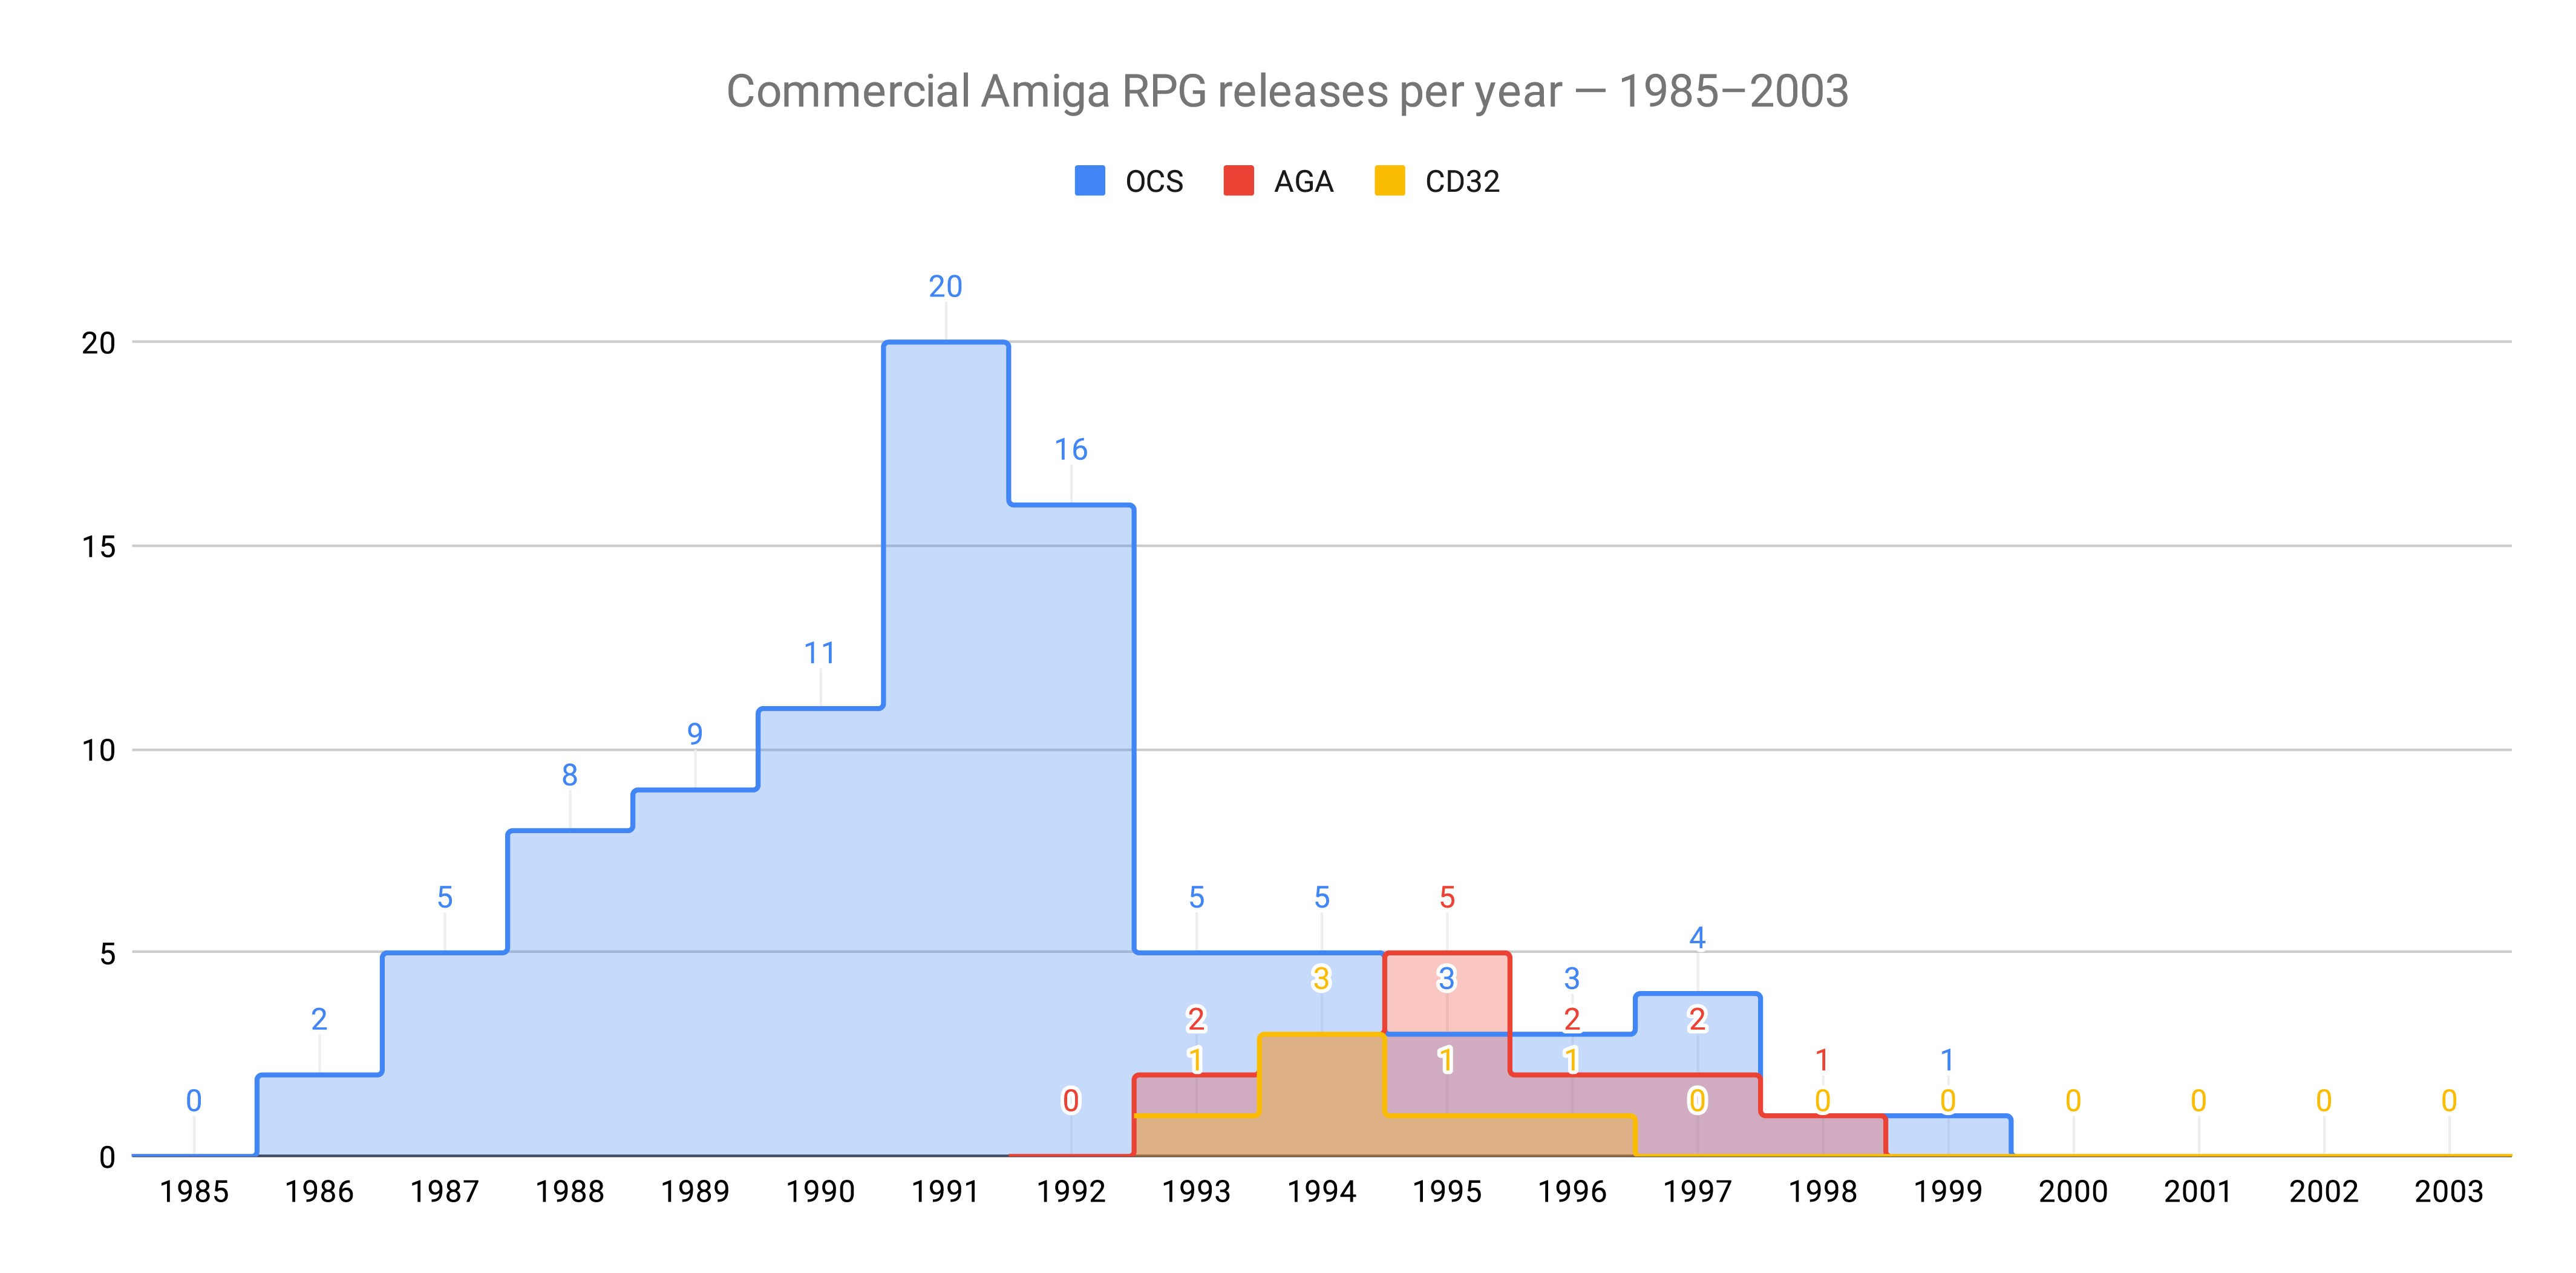 Commercial Amiga RPG releases per year between 1985-2003